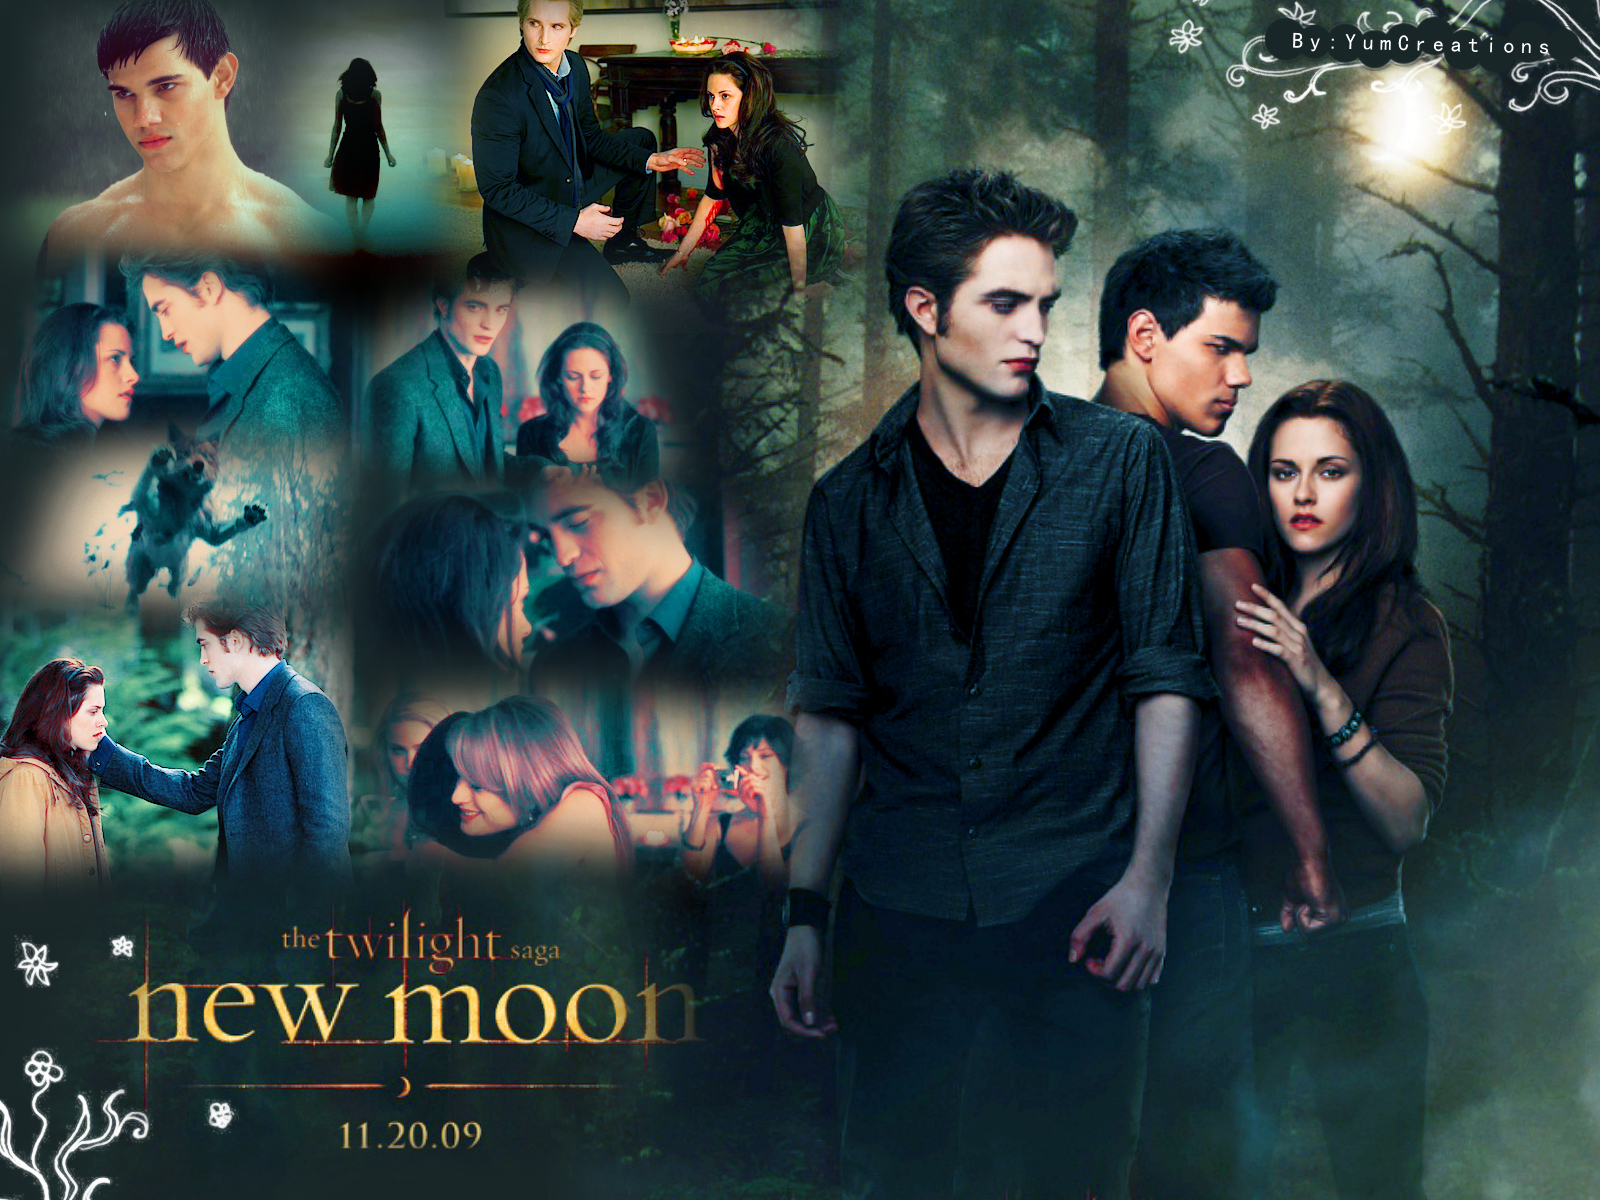 New Moon Wallpaper - New Moon Movie Wallpaper 29944210 - Fanpop